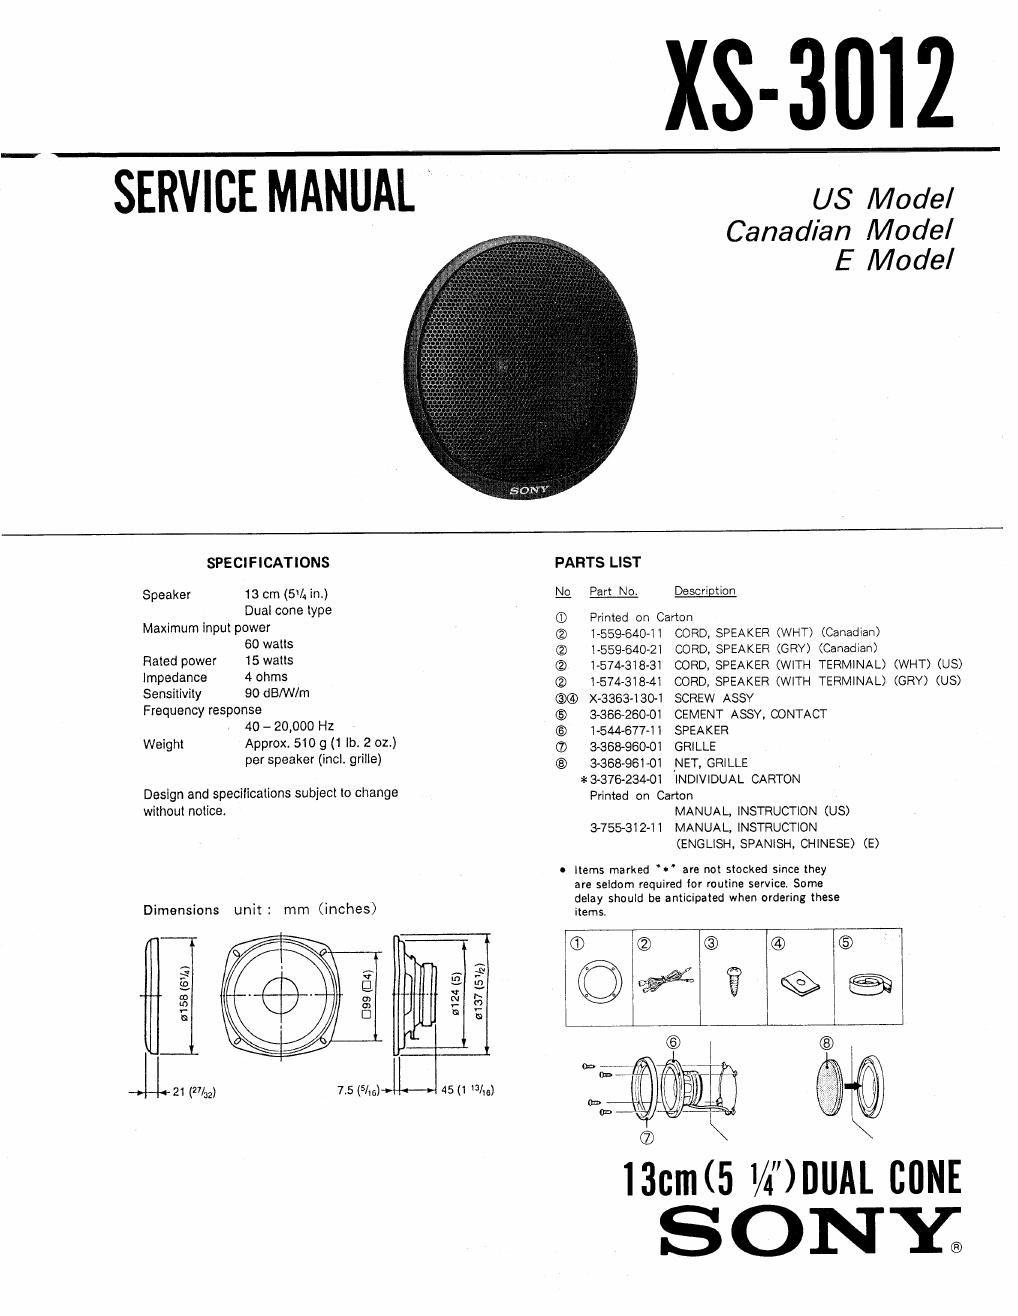 sony xs 3012 service manual